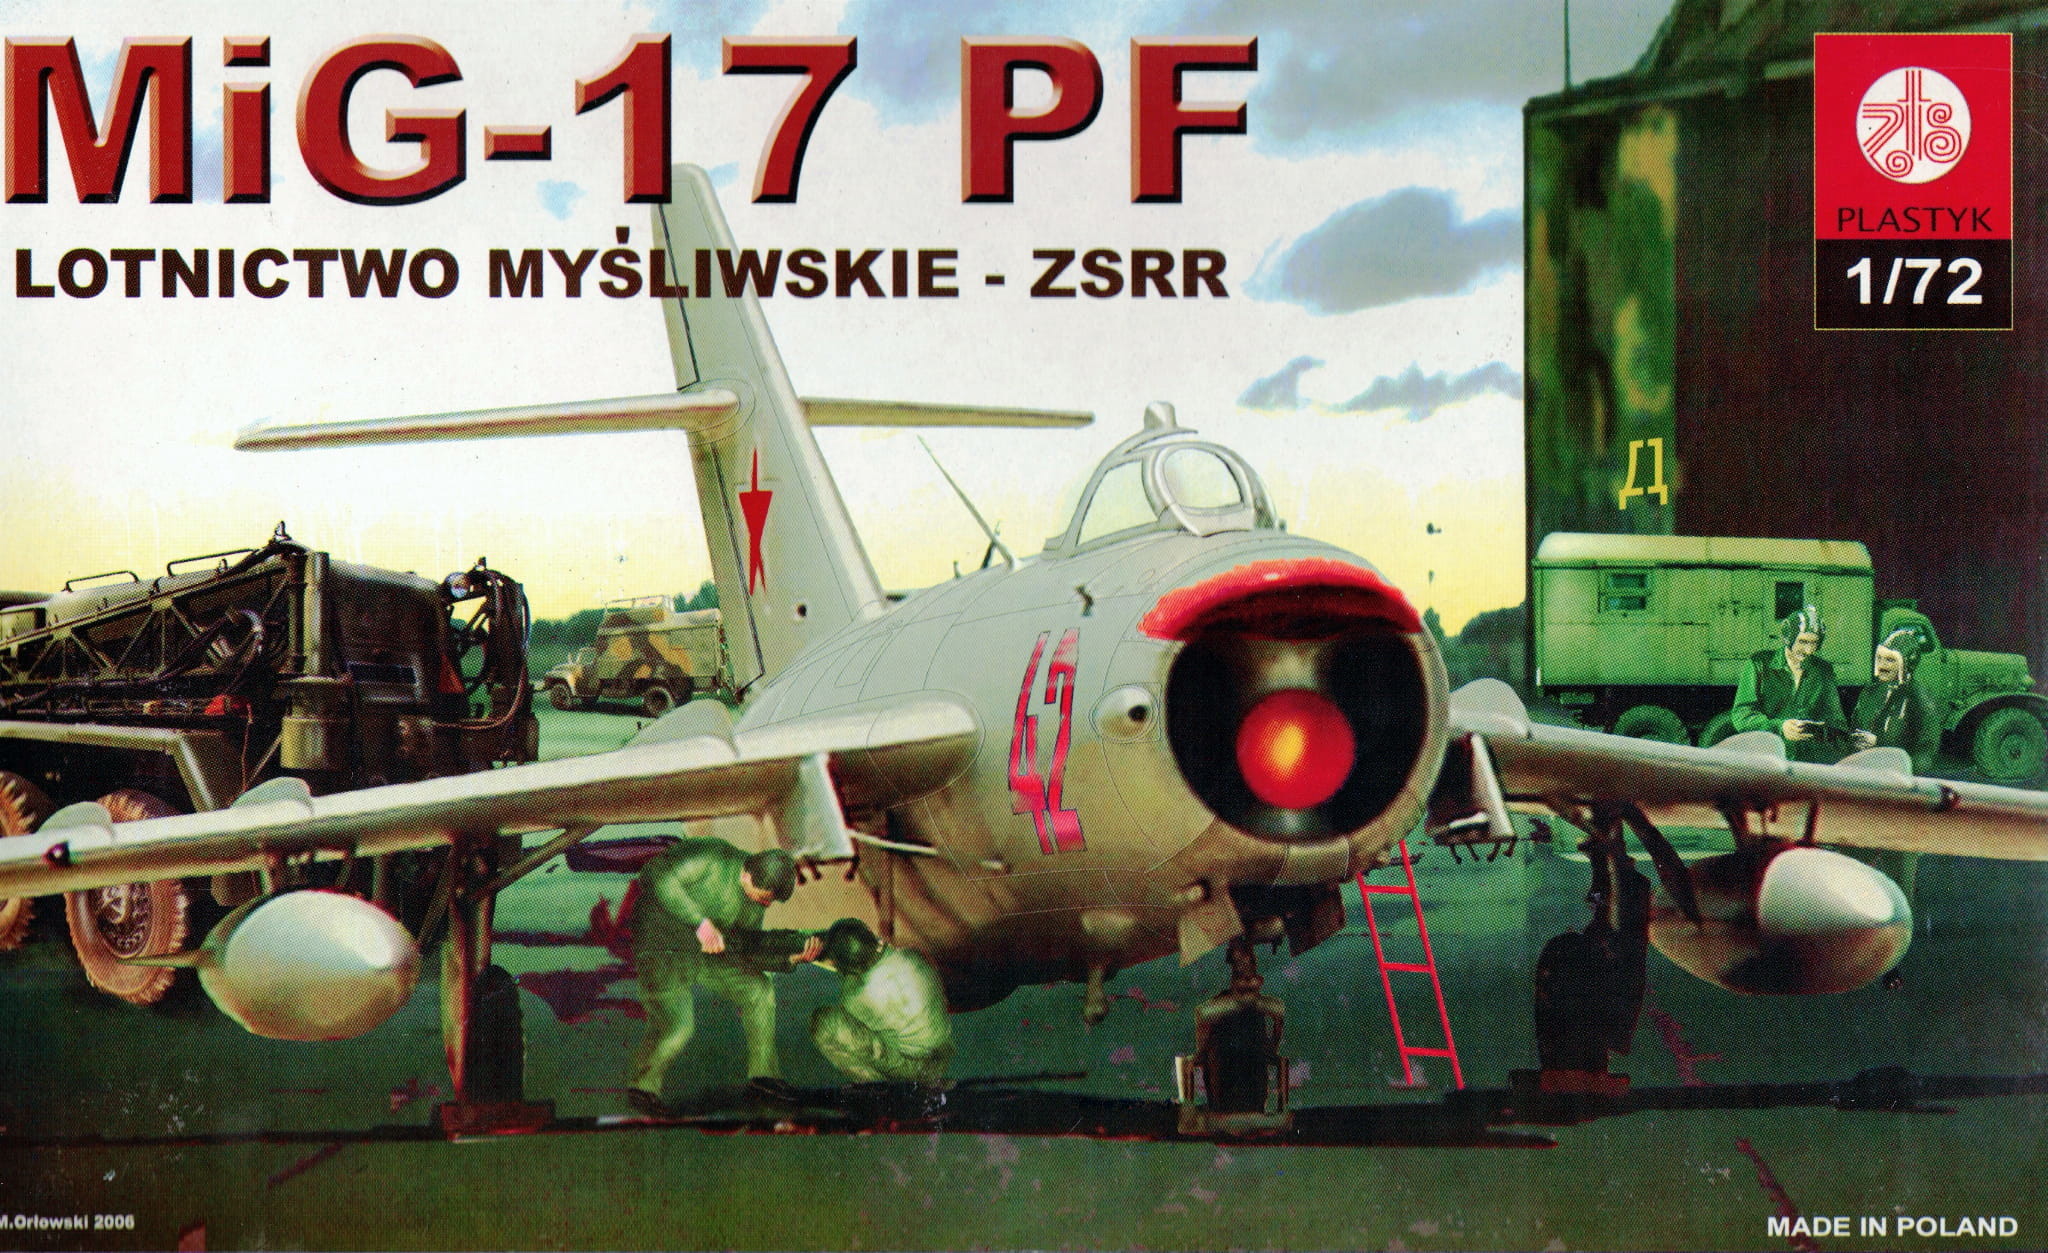 Plastyk ZPT model Samolotu Mig-17 PF Lotnictwo myśliwskie ZSRR